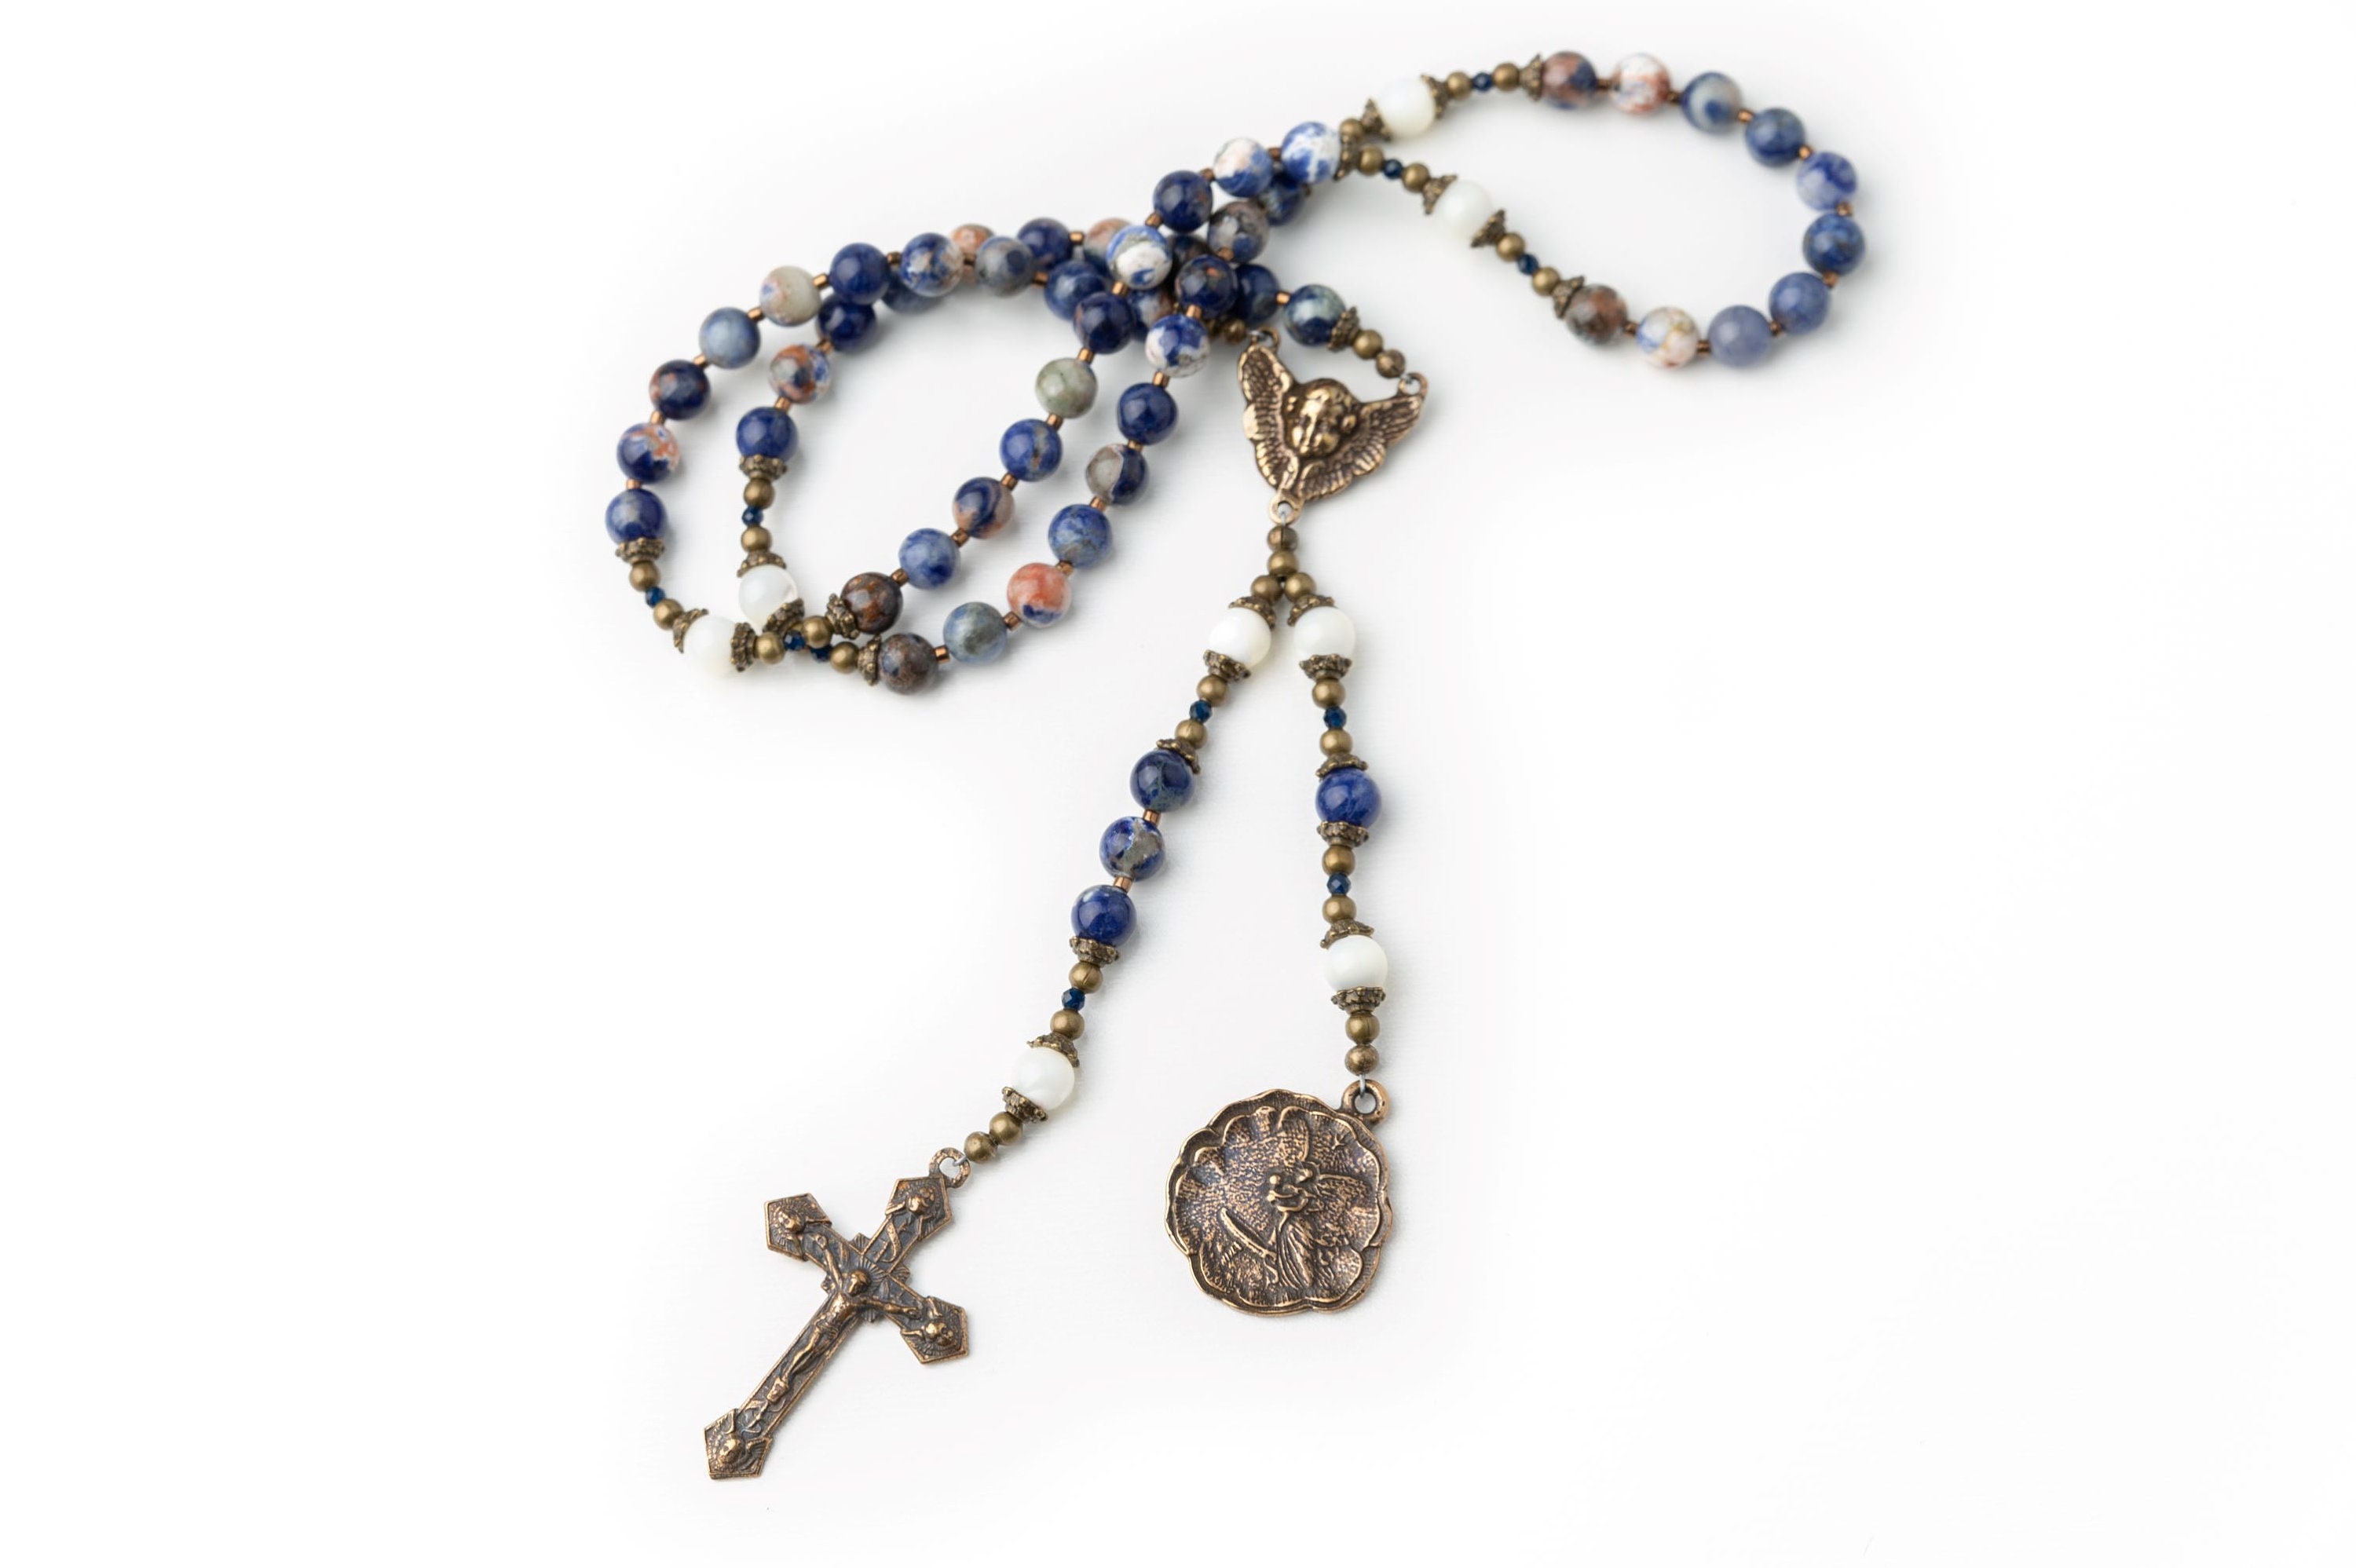 24 Pcs Blue Mini Rosary baptism Favors with Angels for Boy Recuerdos de  Bautizo Finger Rosaries Silver Plated JA380silver-blue 